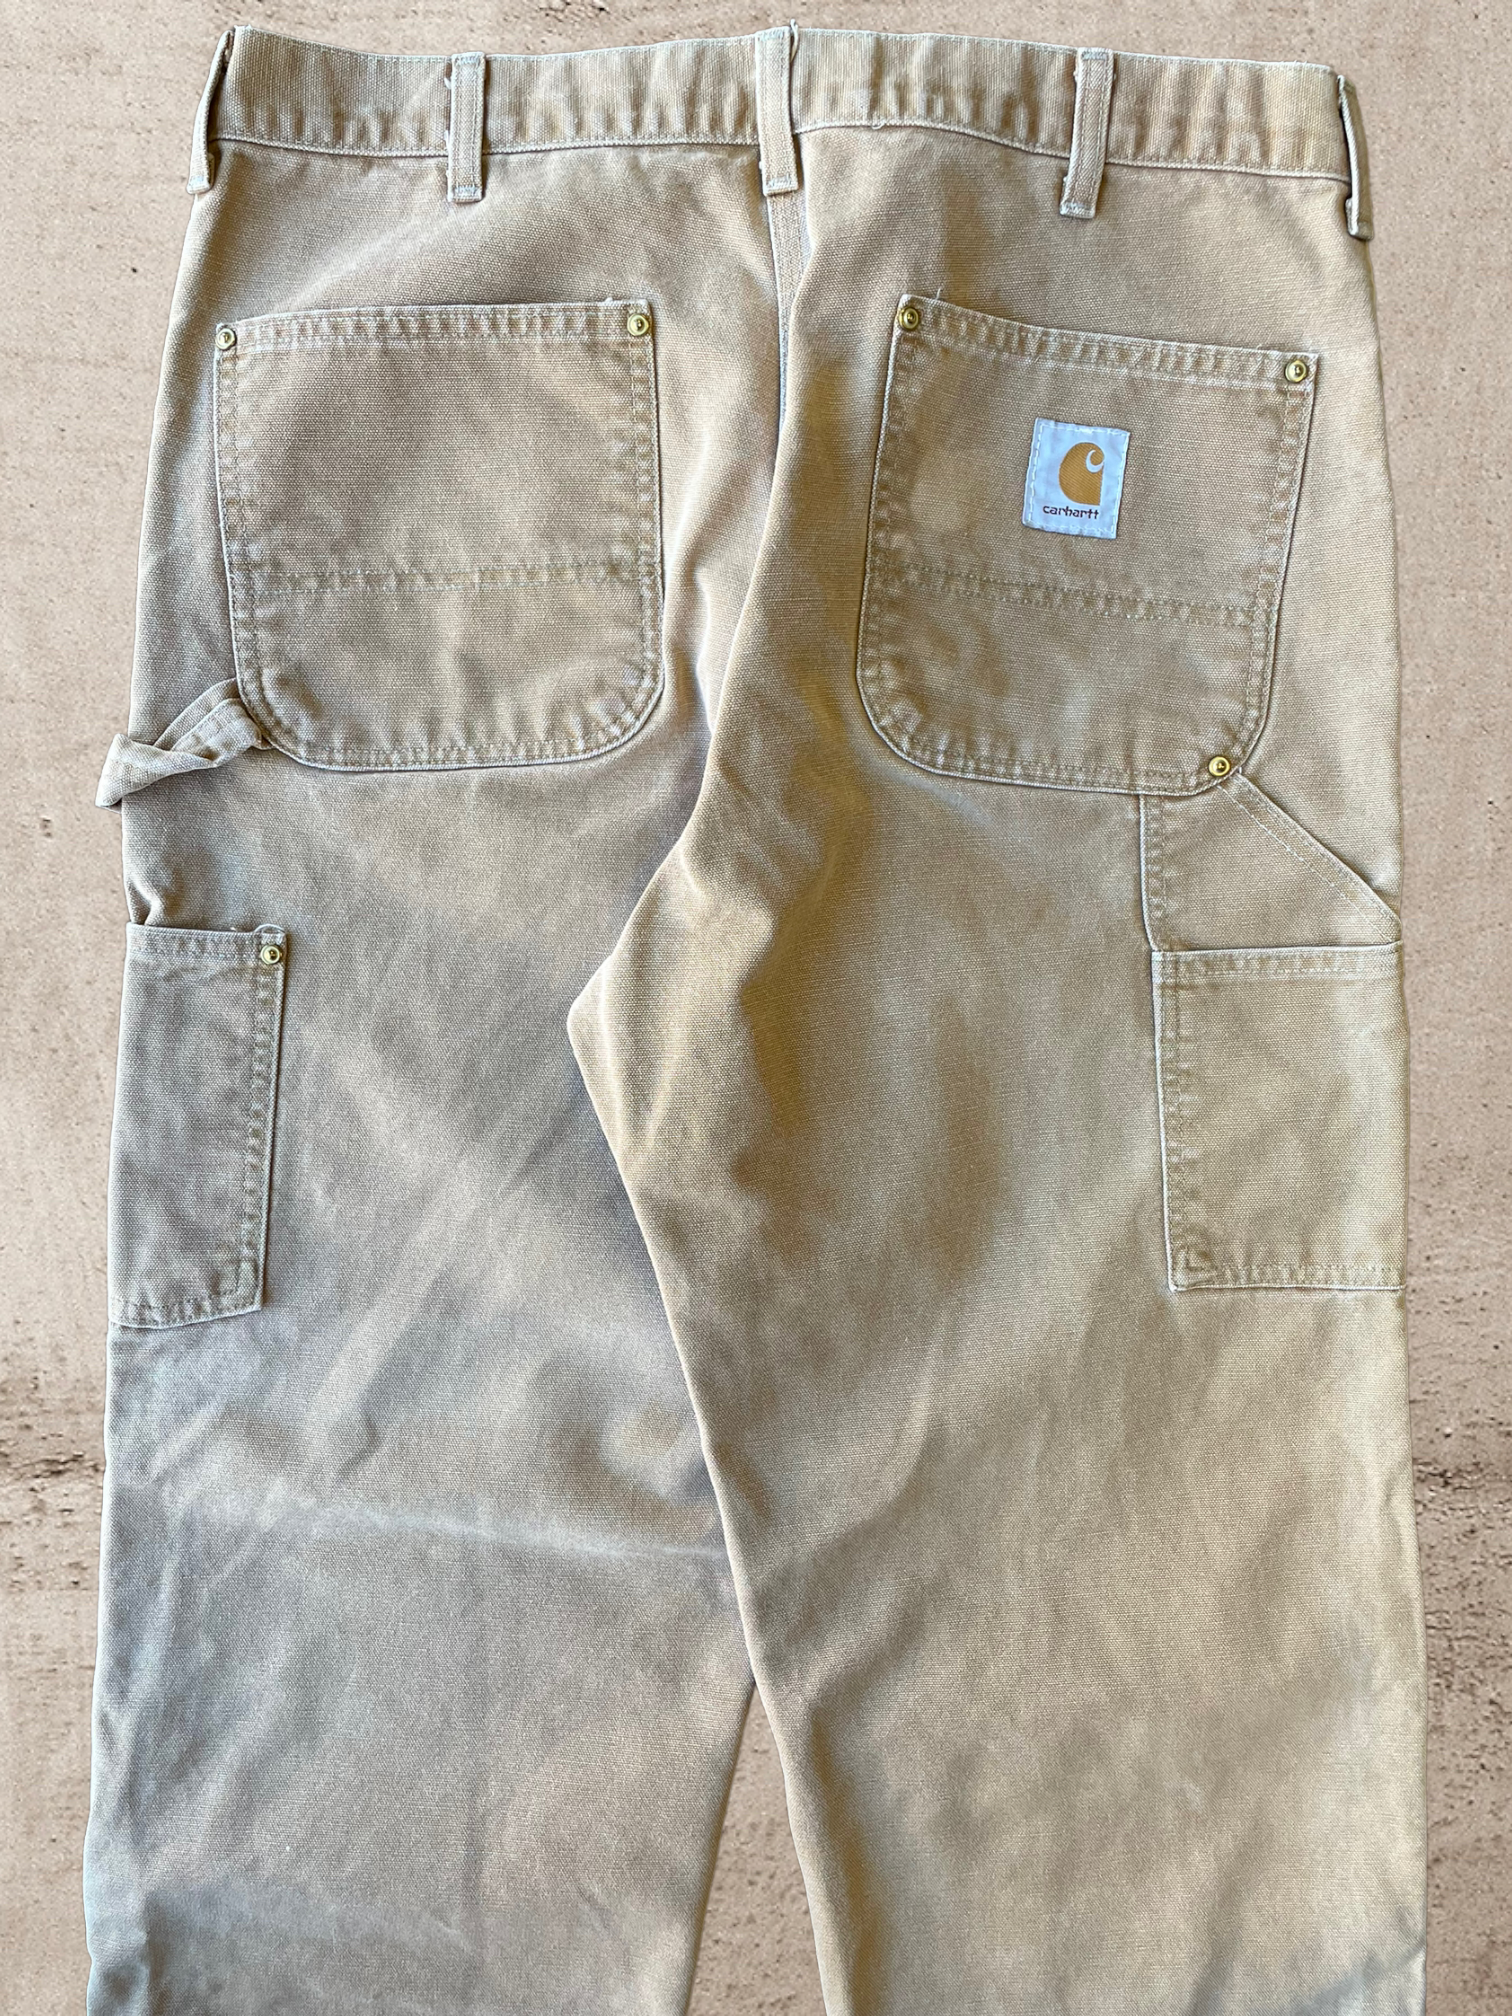 Vintage Carhartt Double Knee Pants - 36x30